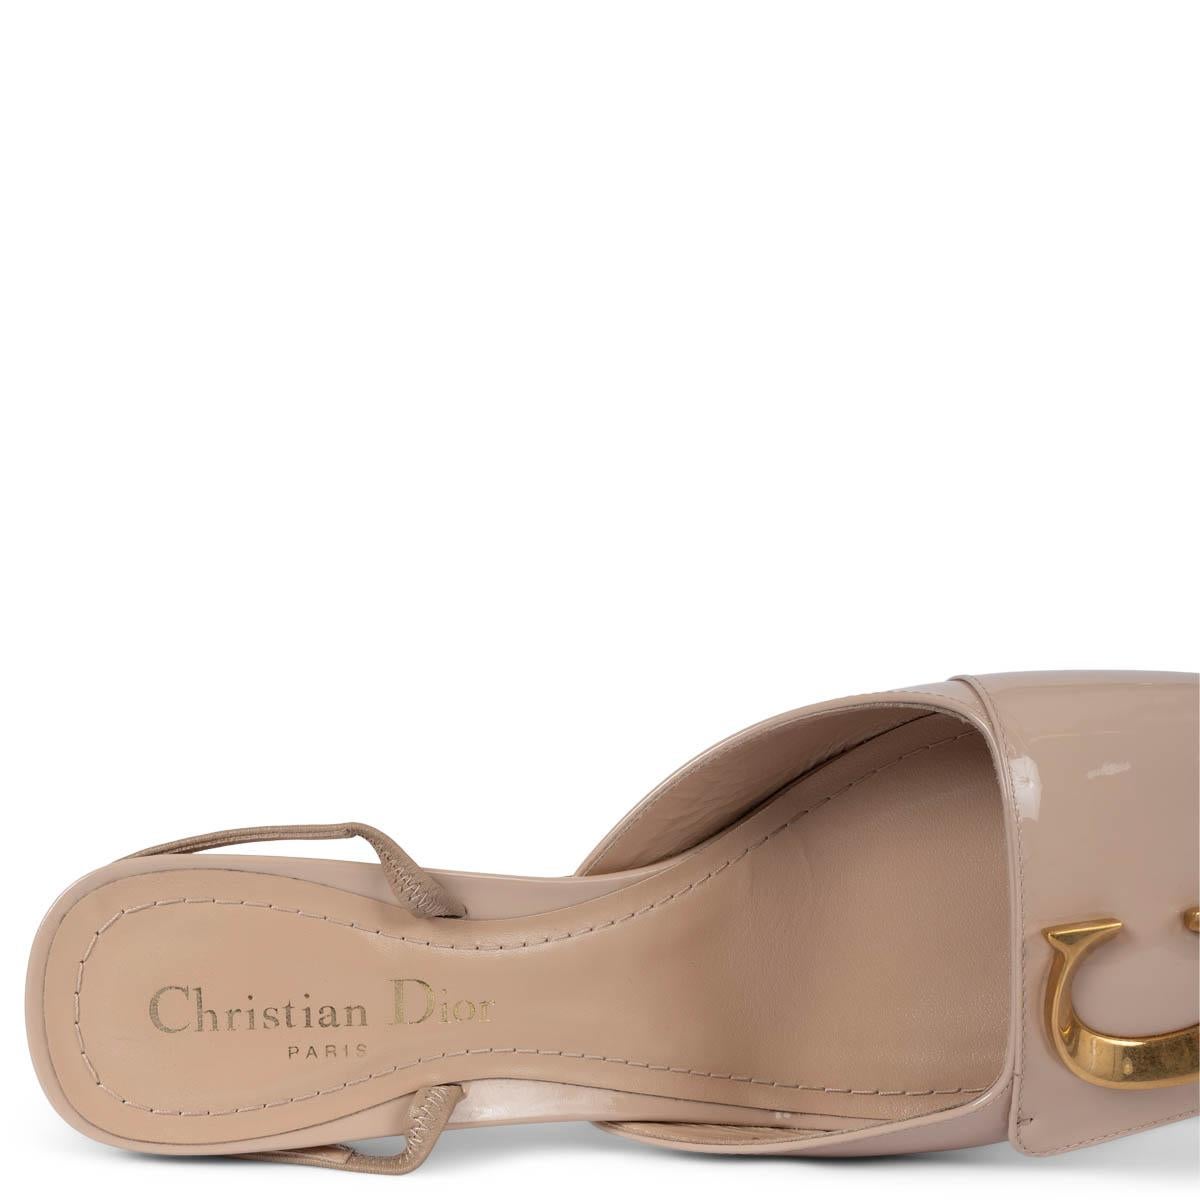 CHRISTIAN DIOR nude patent leather C'EST DIOR Slingbacks Pumps Shoes 38.5 For Sale 4